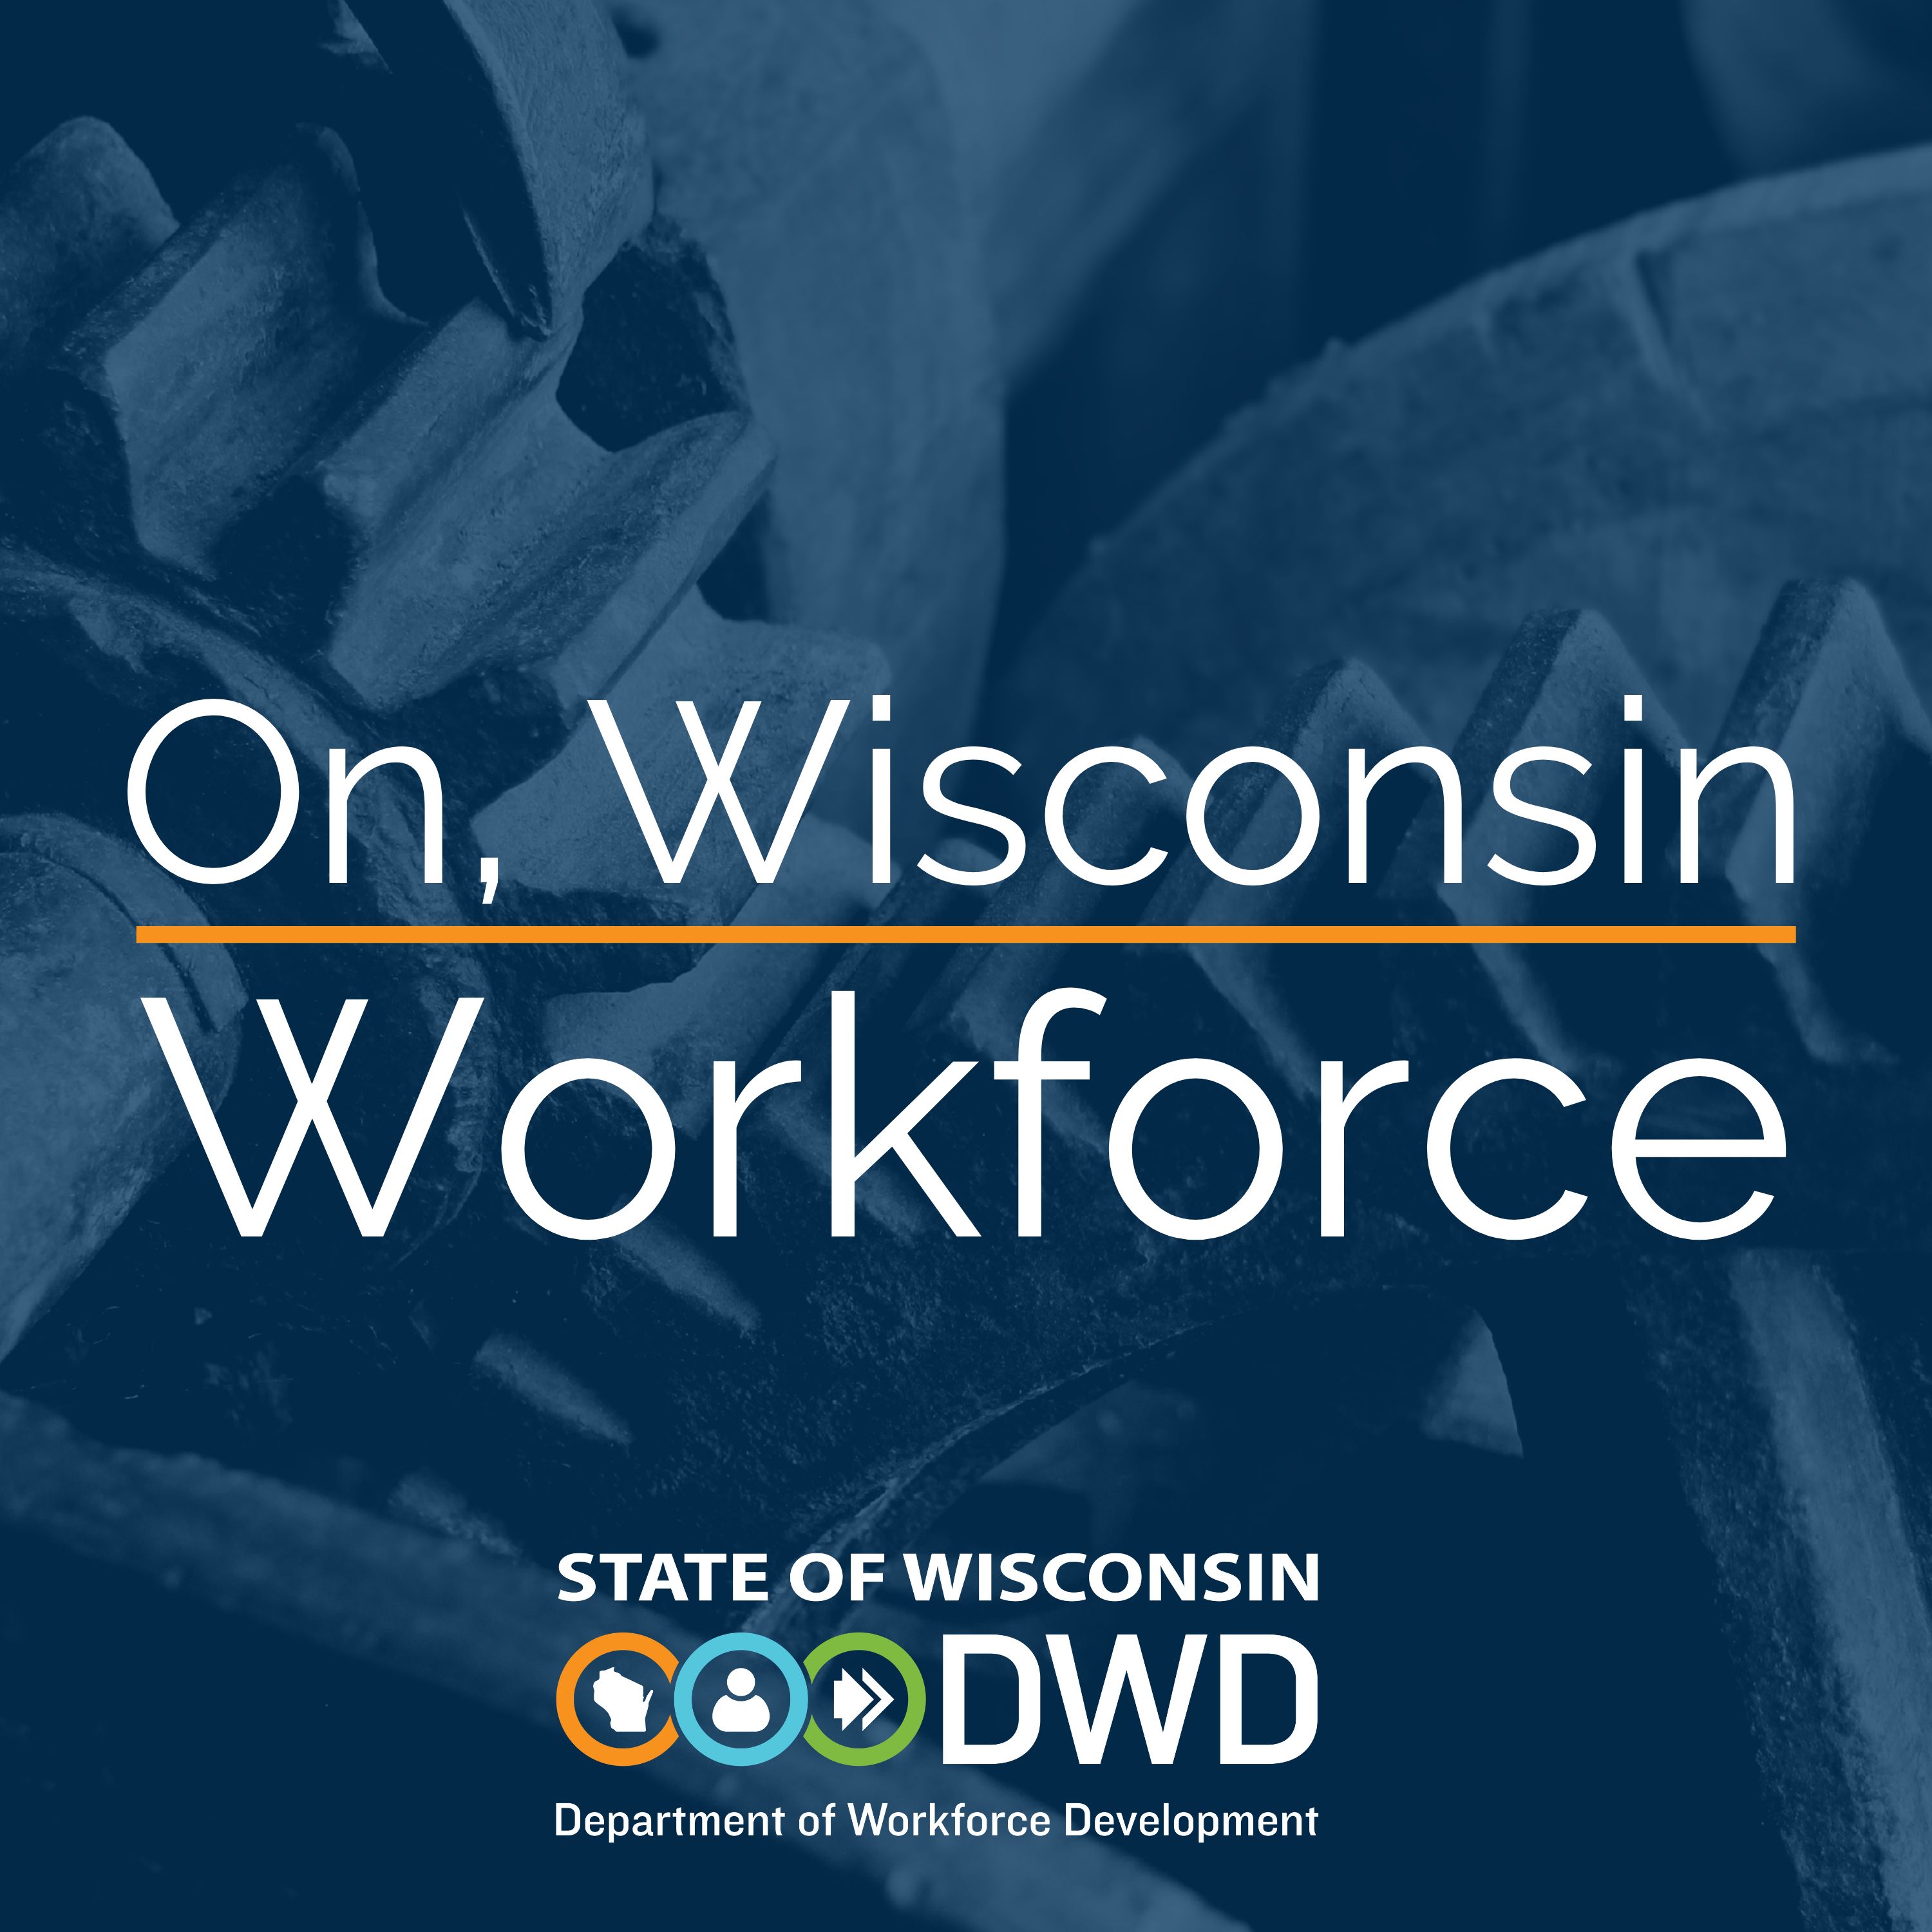 On, Wisconsin Workforce